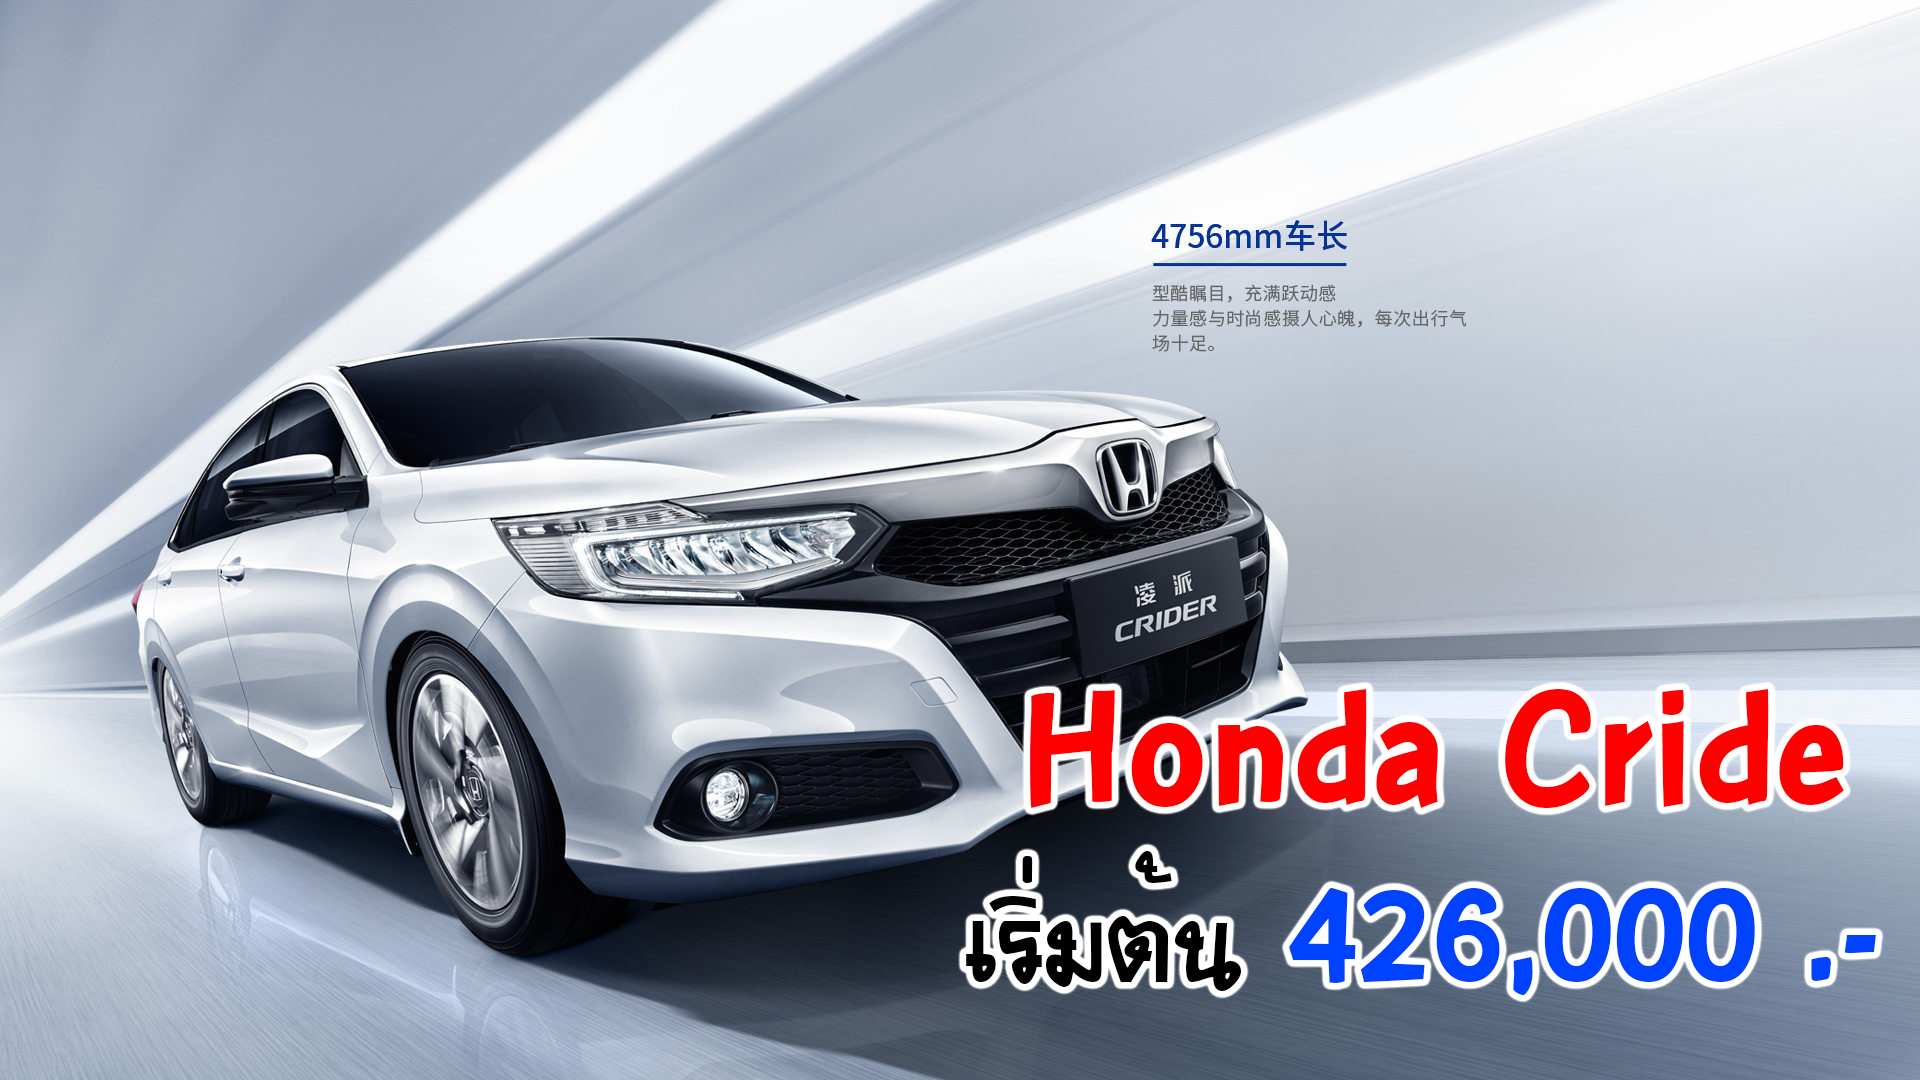 Honda Cride ซีดาน ราคาเบาๆ 426,000 บาท ในเมืองจีน